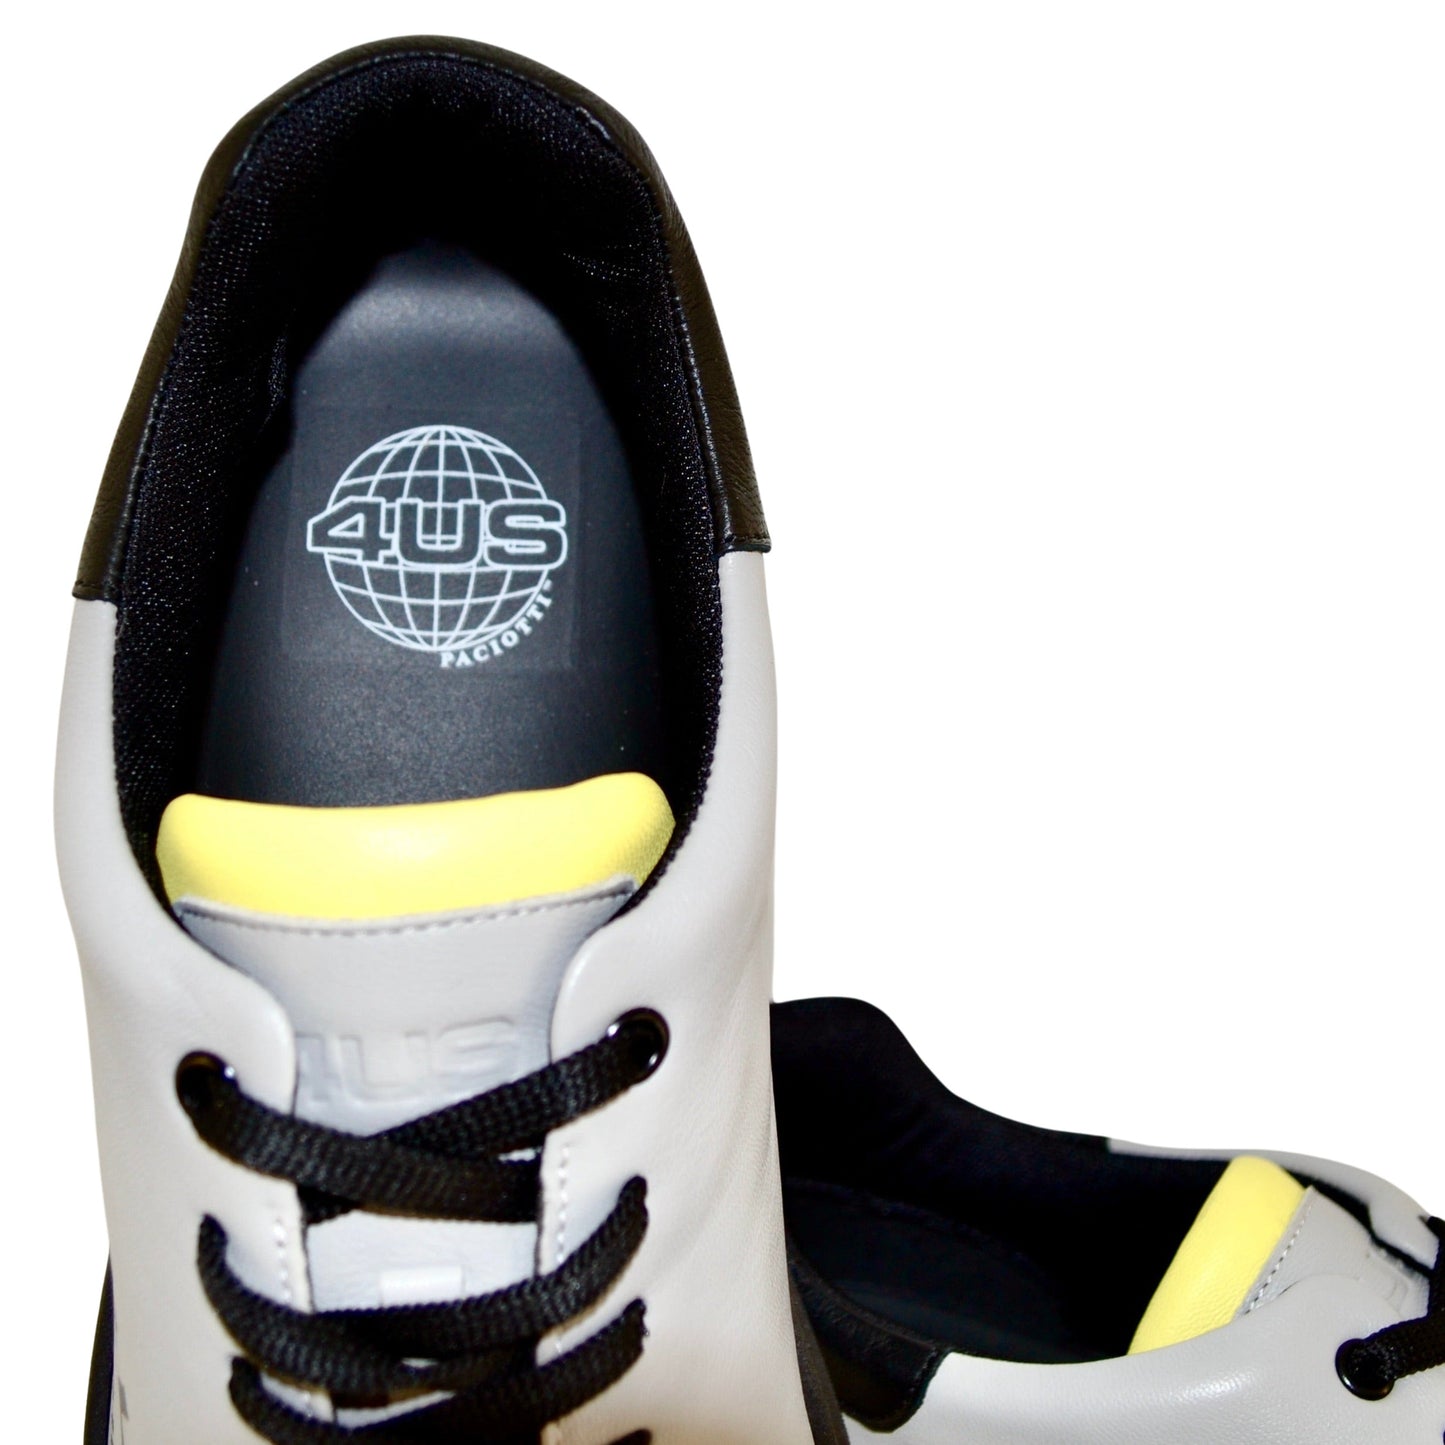 Sneakers Cesare Paciotti 4us man grey leather